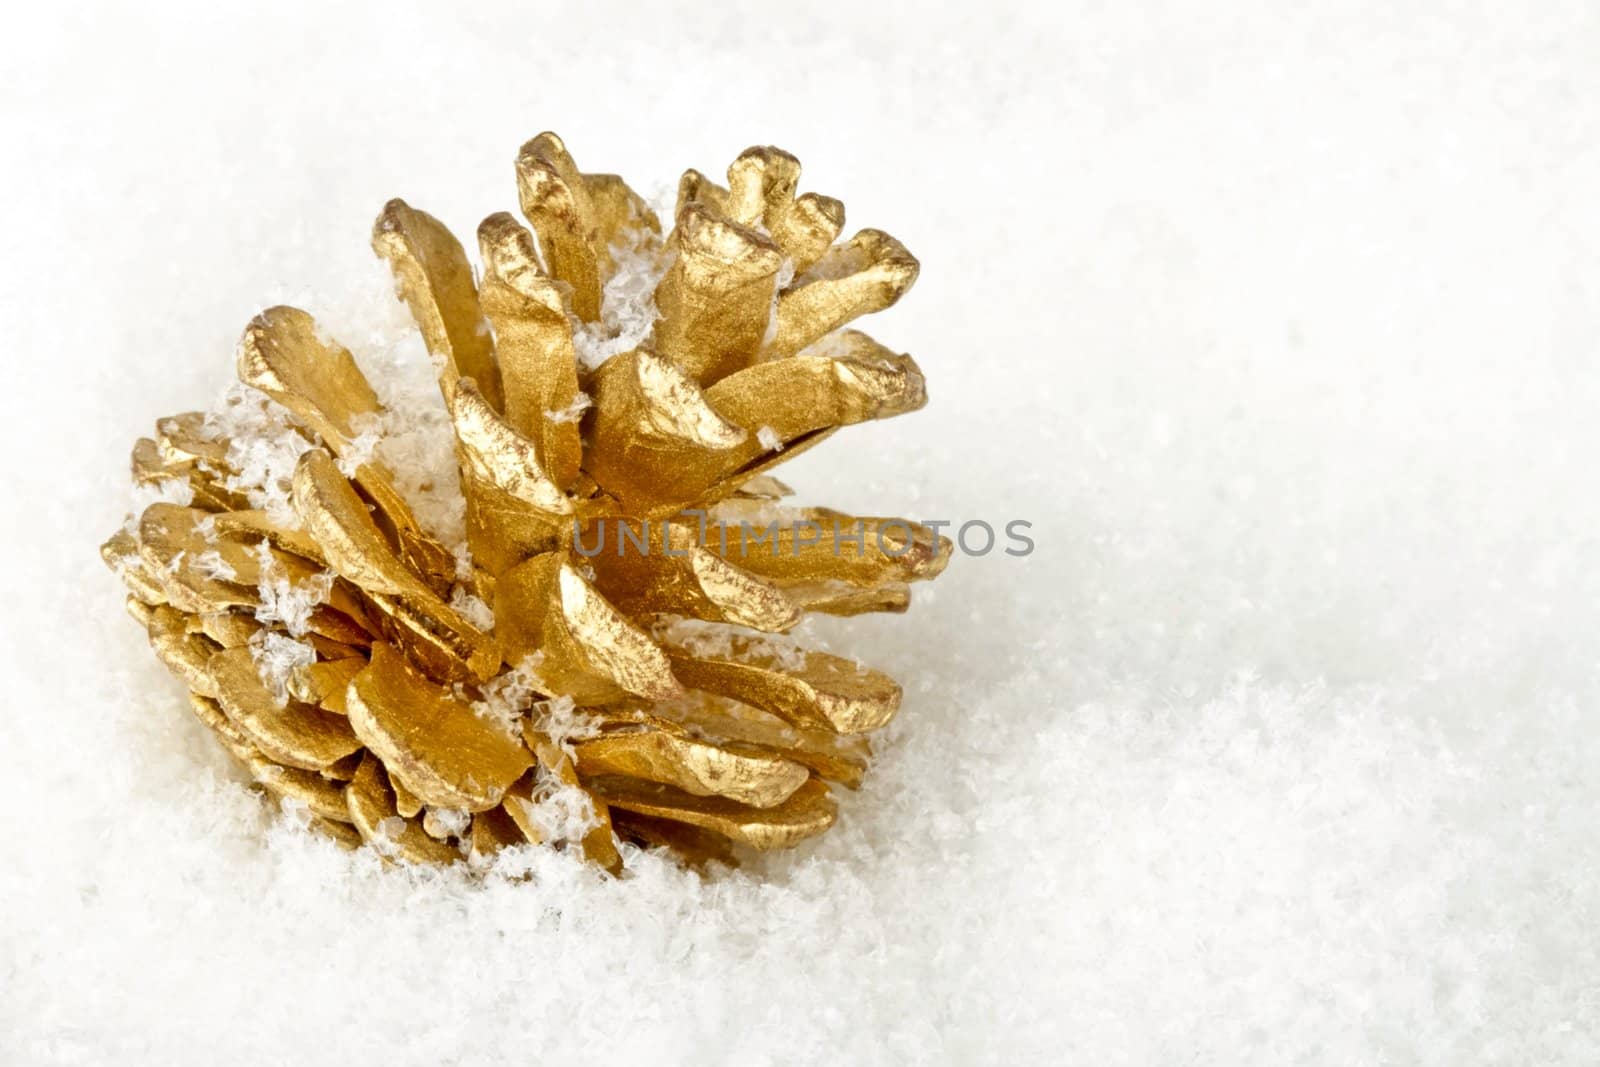 Golden fir apple in the snow by devy